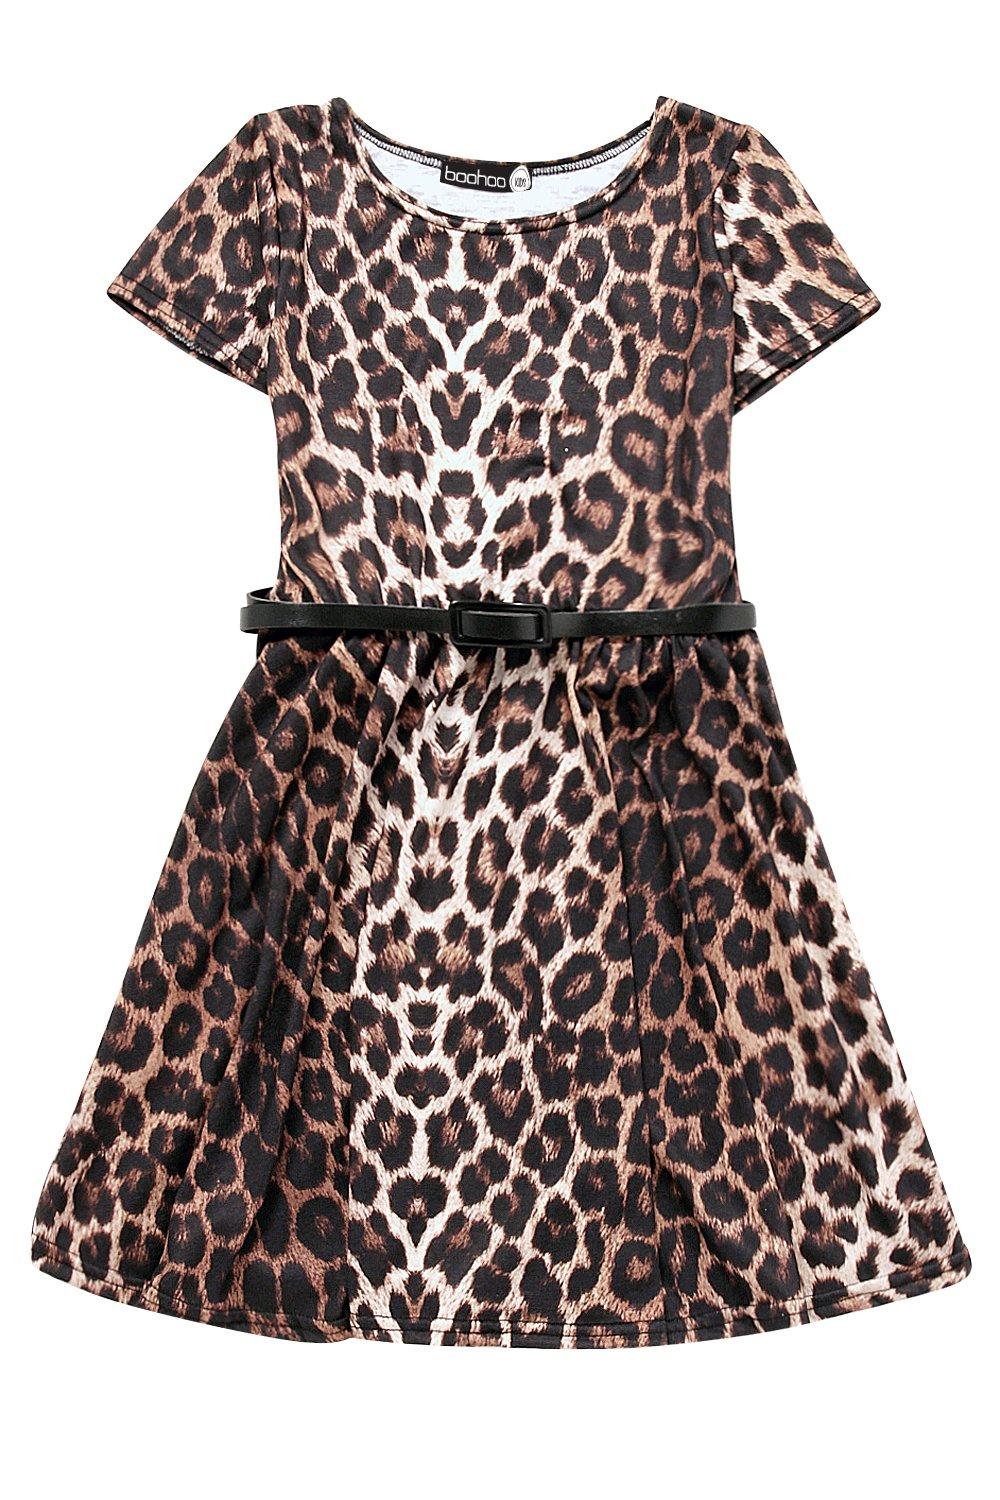 Boohoo Womens Girls Leopard Print Belted Skater Dress | eBay